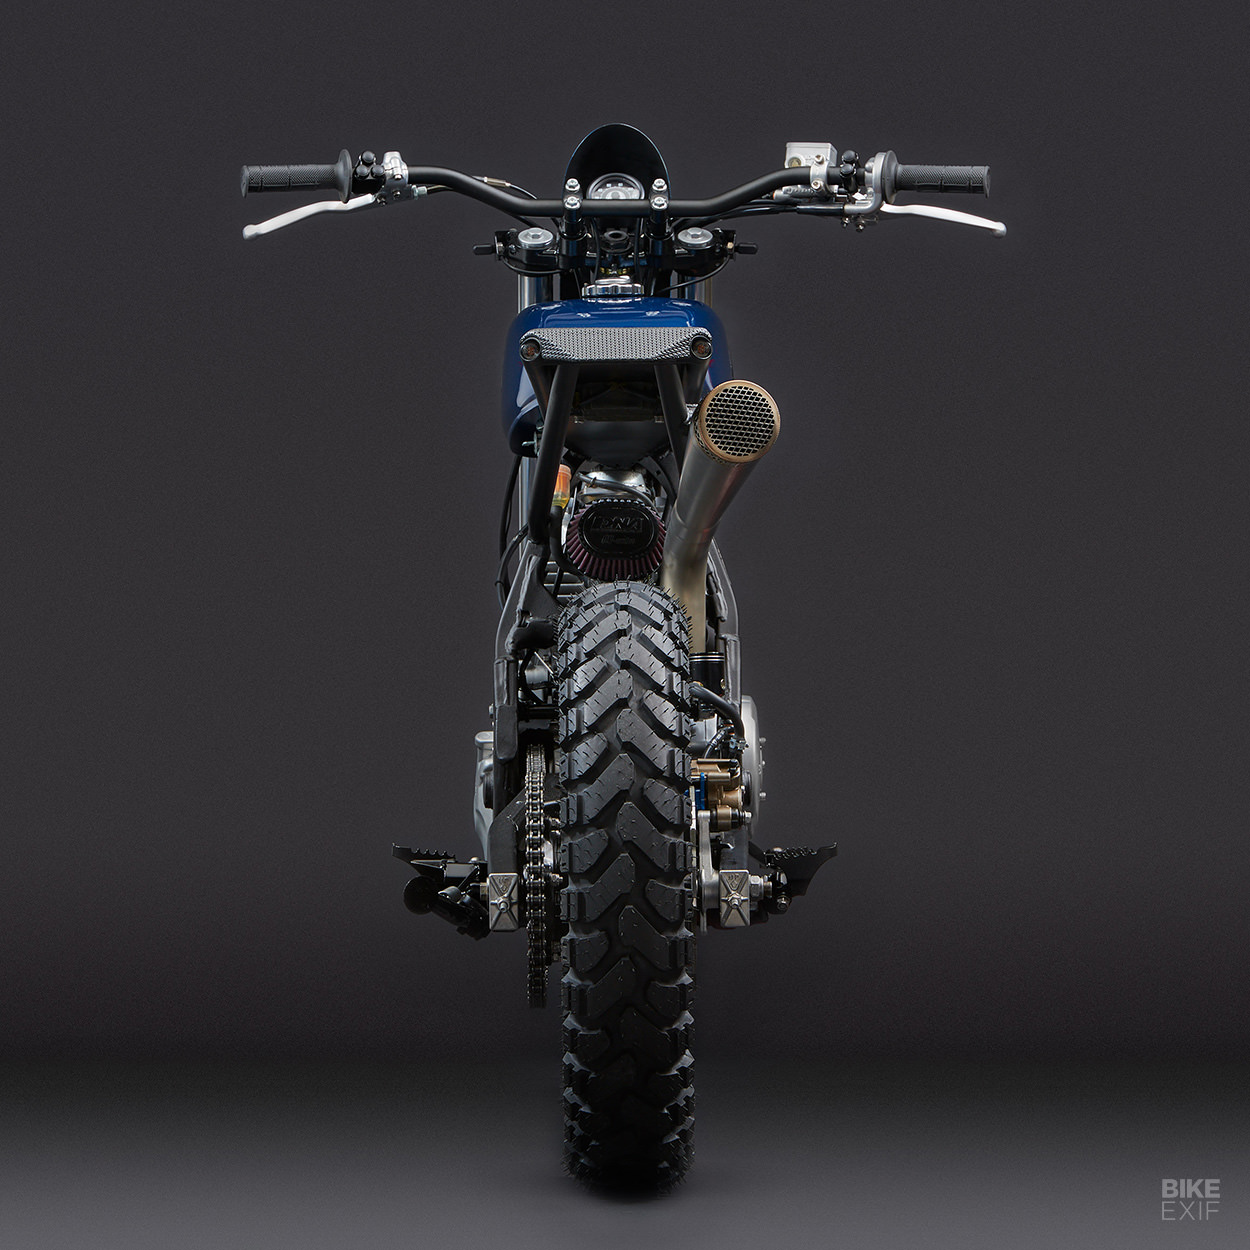 Honda NX650 Dominator scrambler by Earth Motorcycles